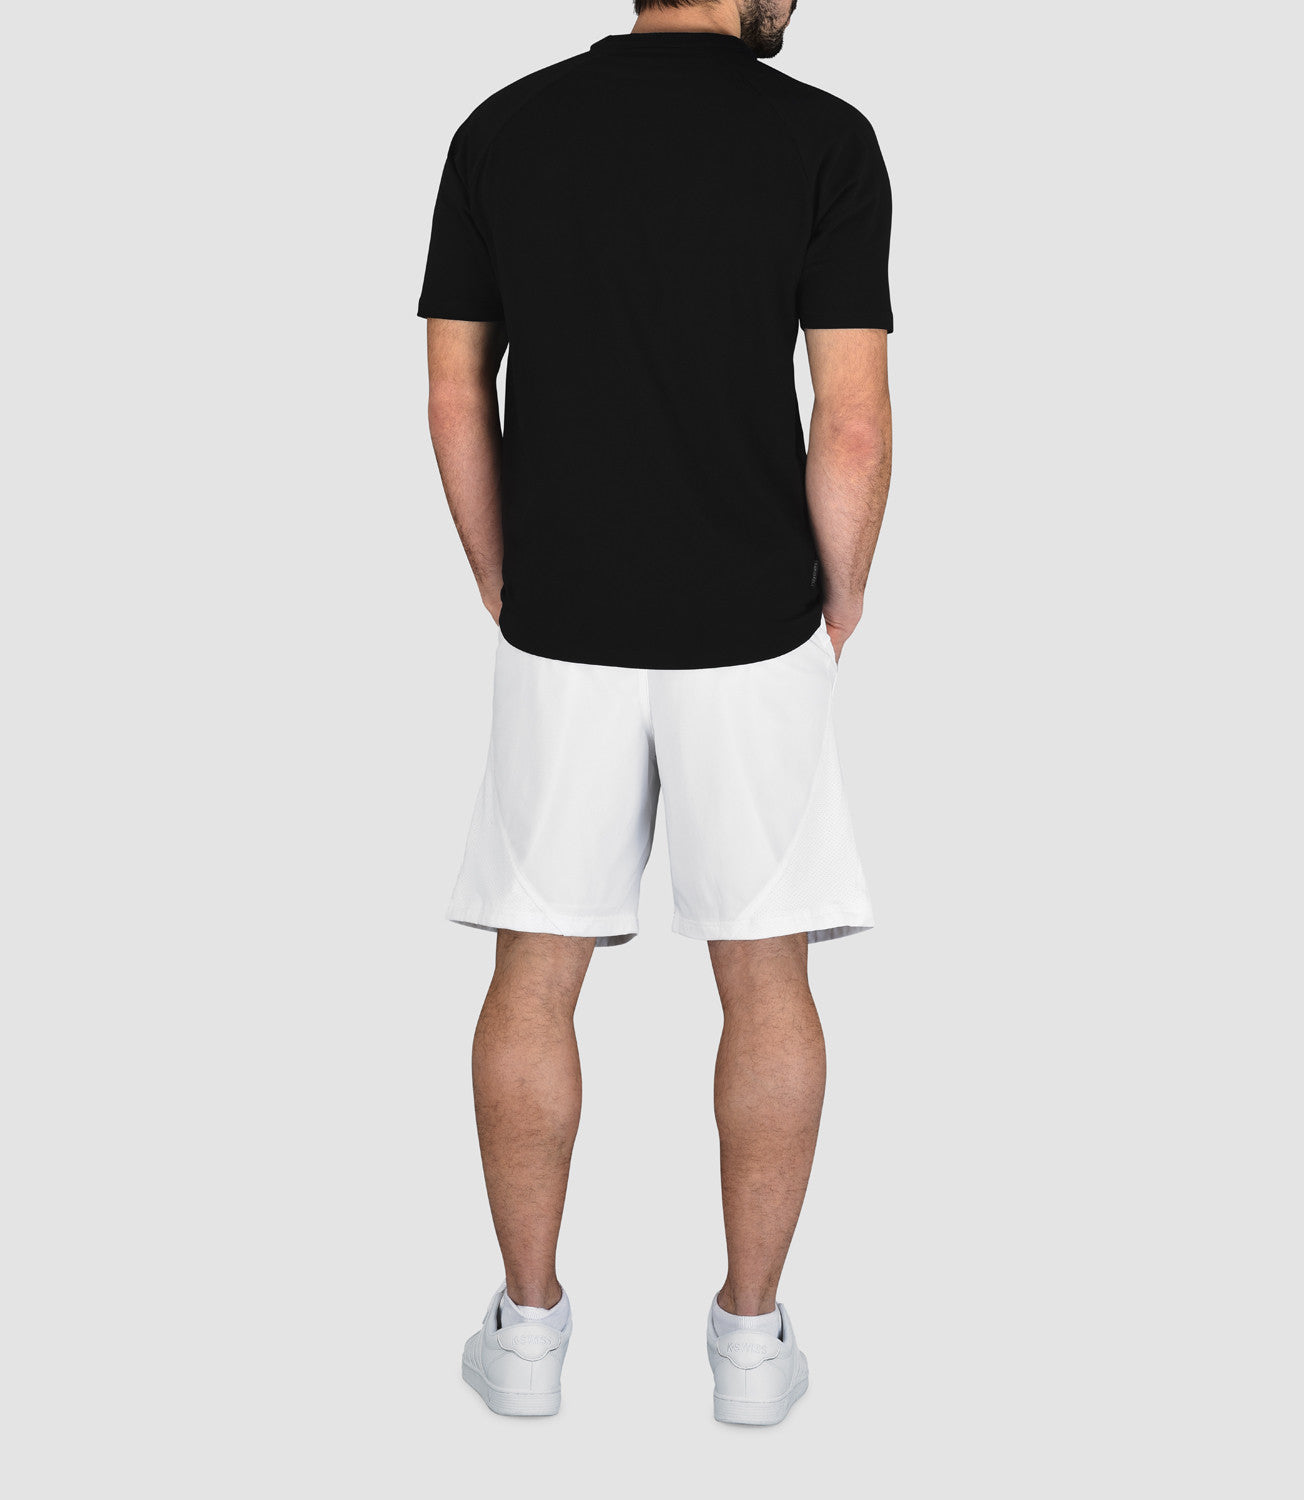 Men's Tops Tennis/Fitness/Golf Clothing -Blake Merino Button Neck Polo-PlayBrave-Black-S-PlayBrave Sports UK